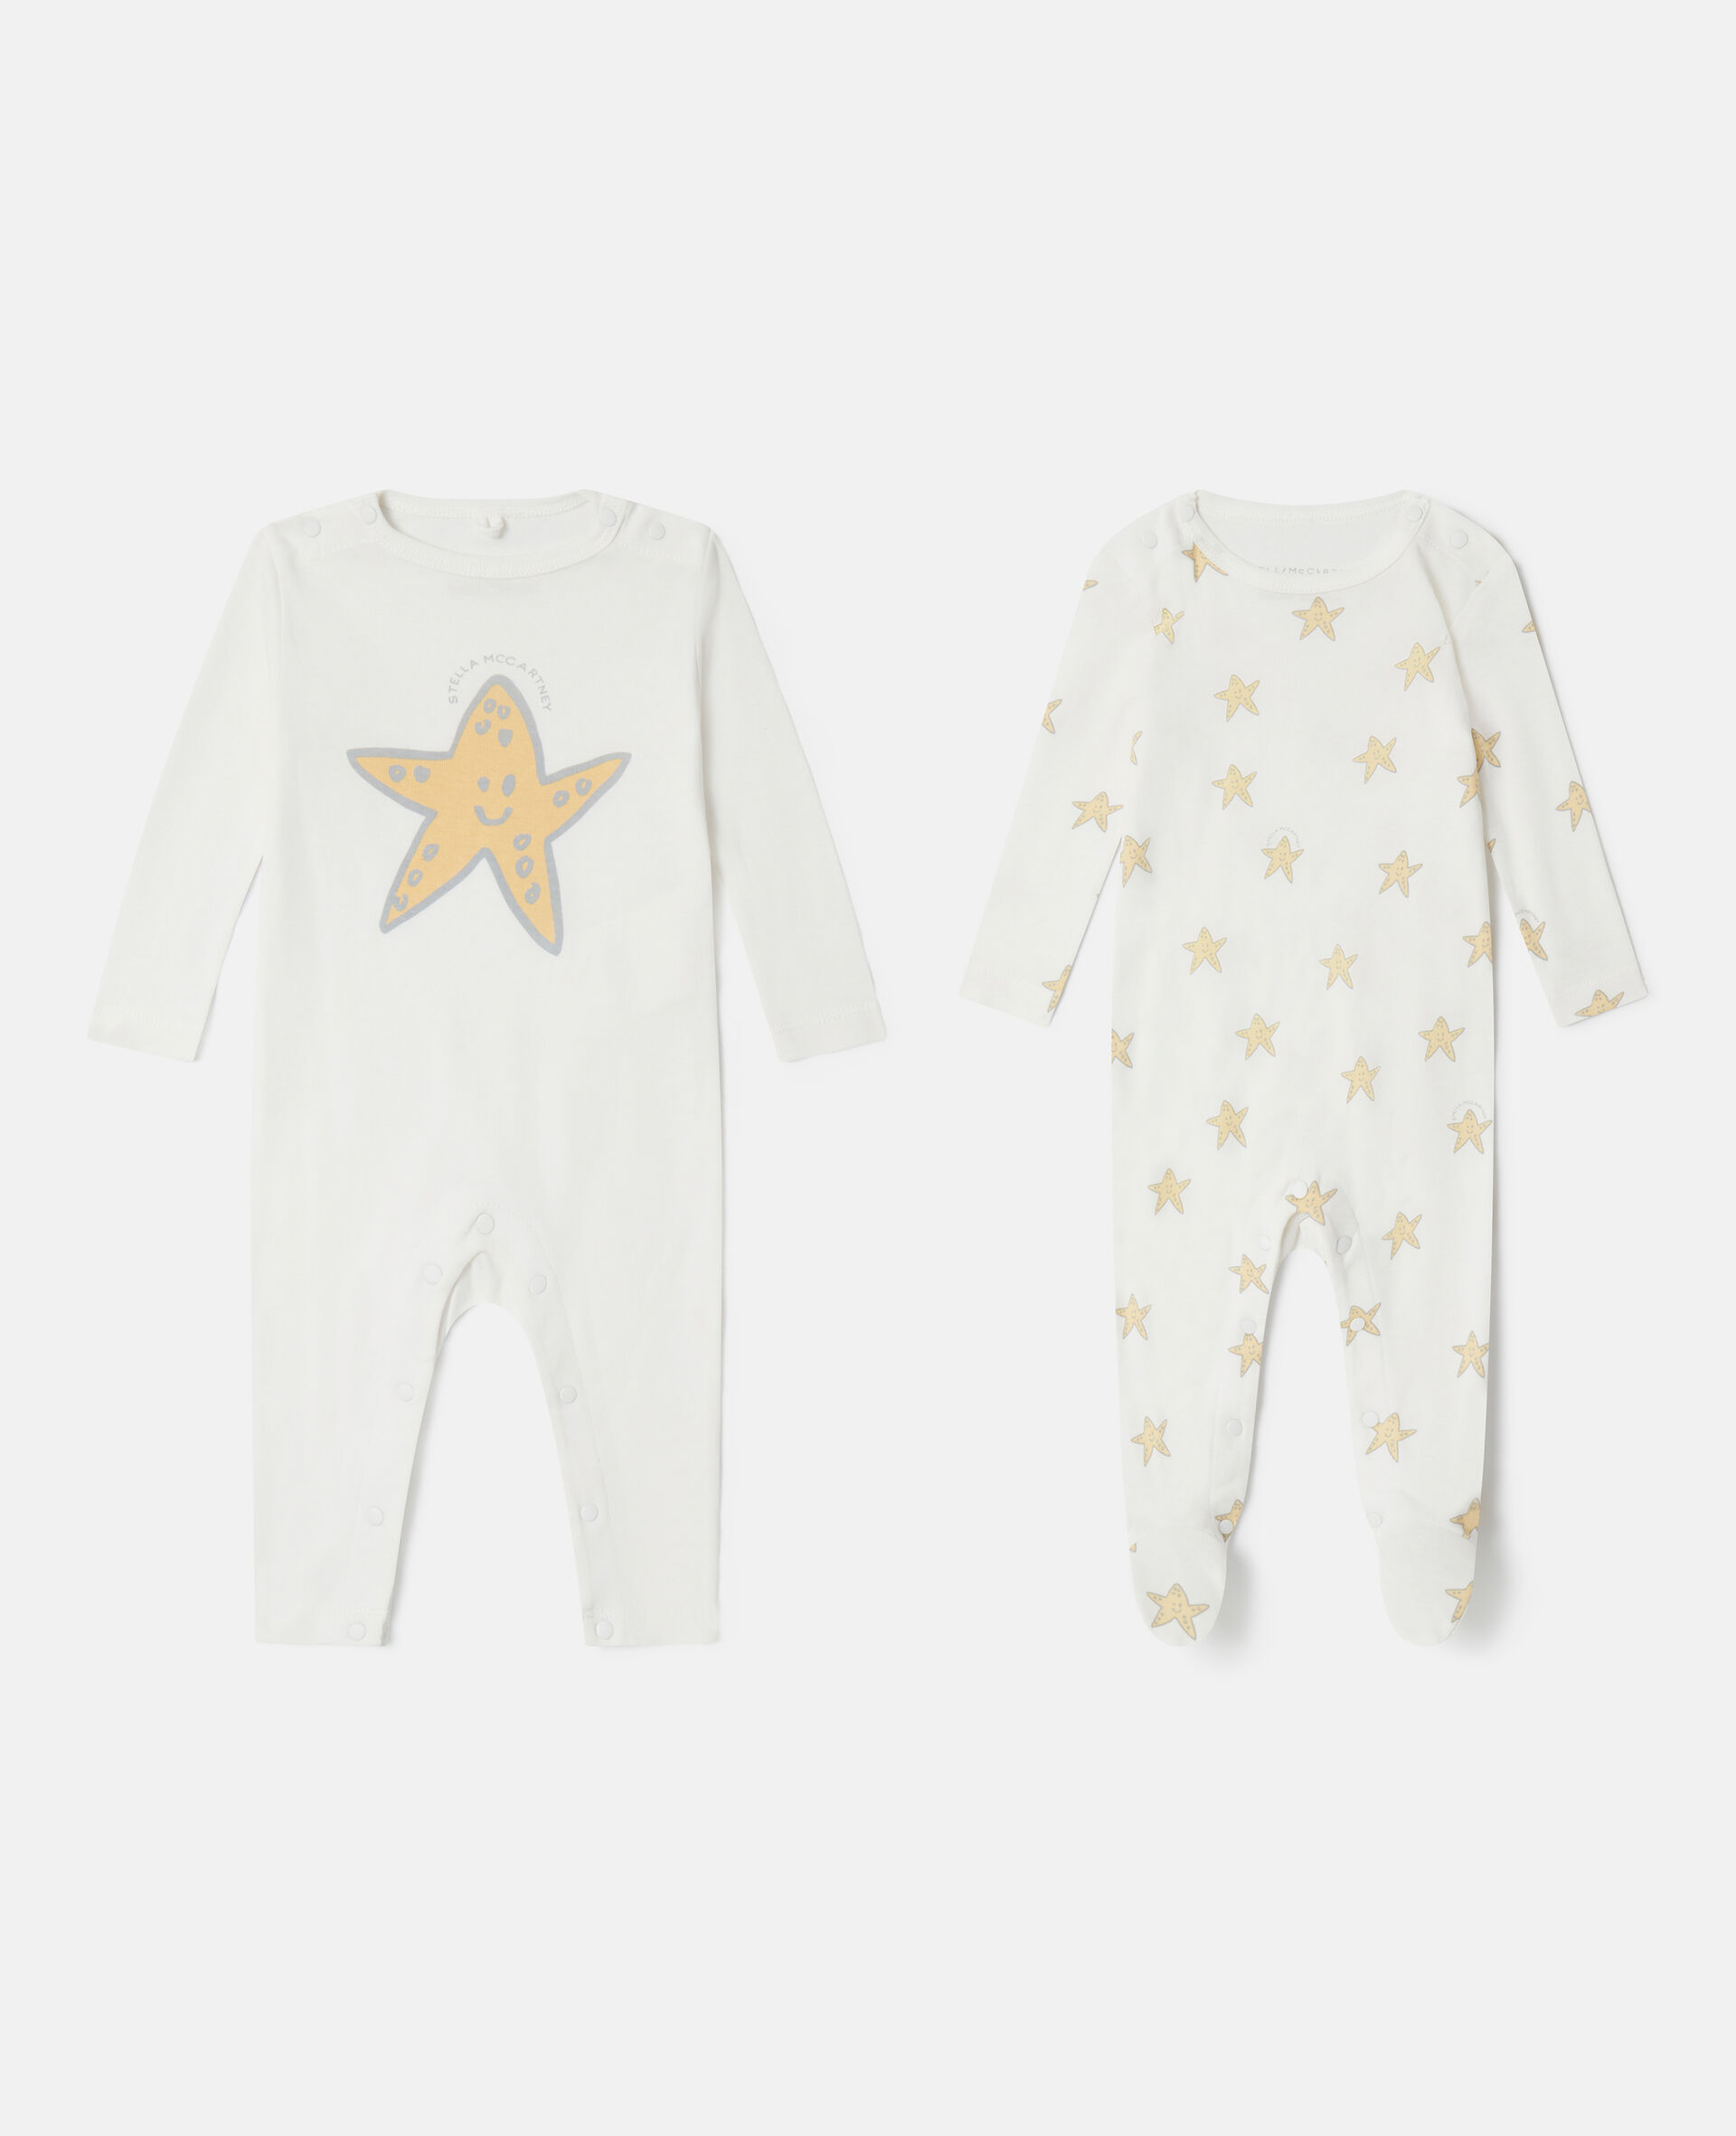 Smiling Stella Star Print Sleepsuit Set-Fantasia-medium